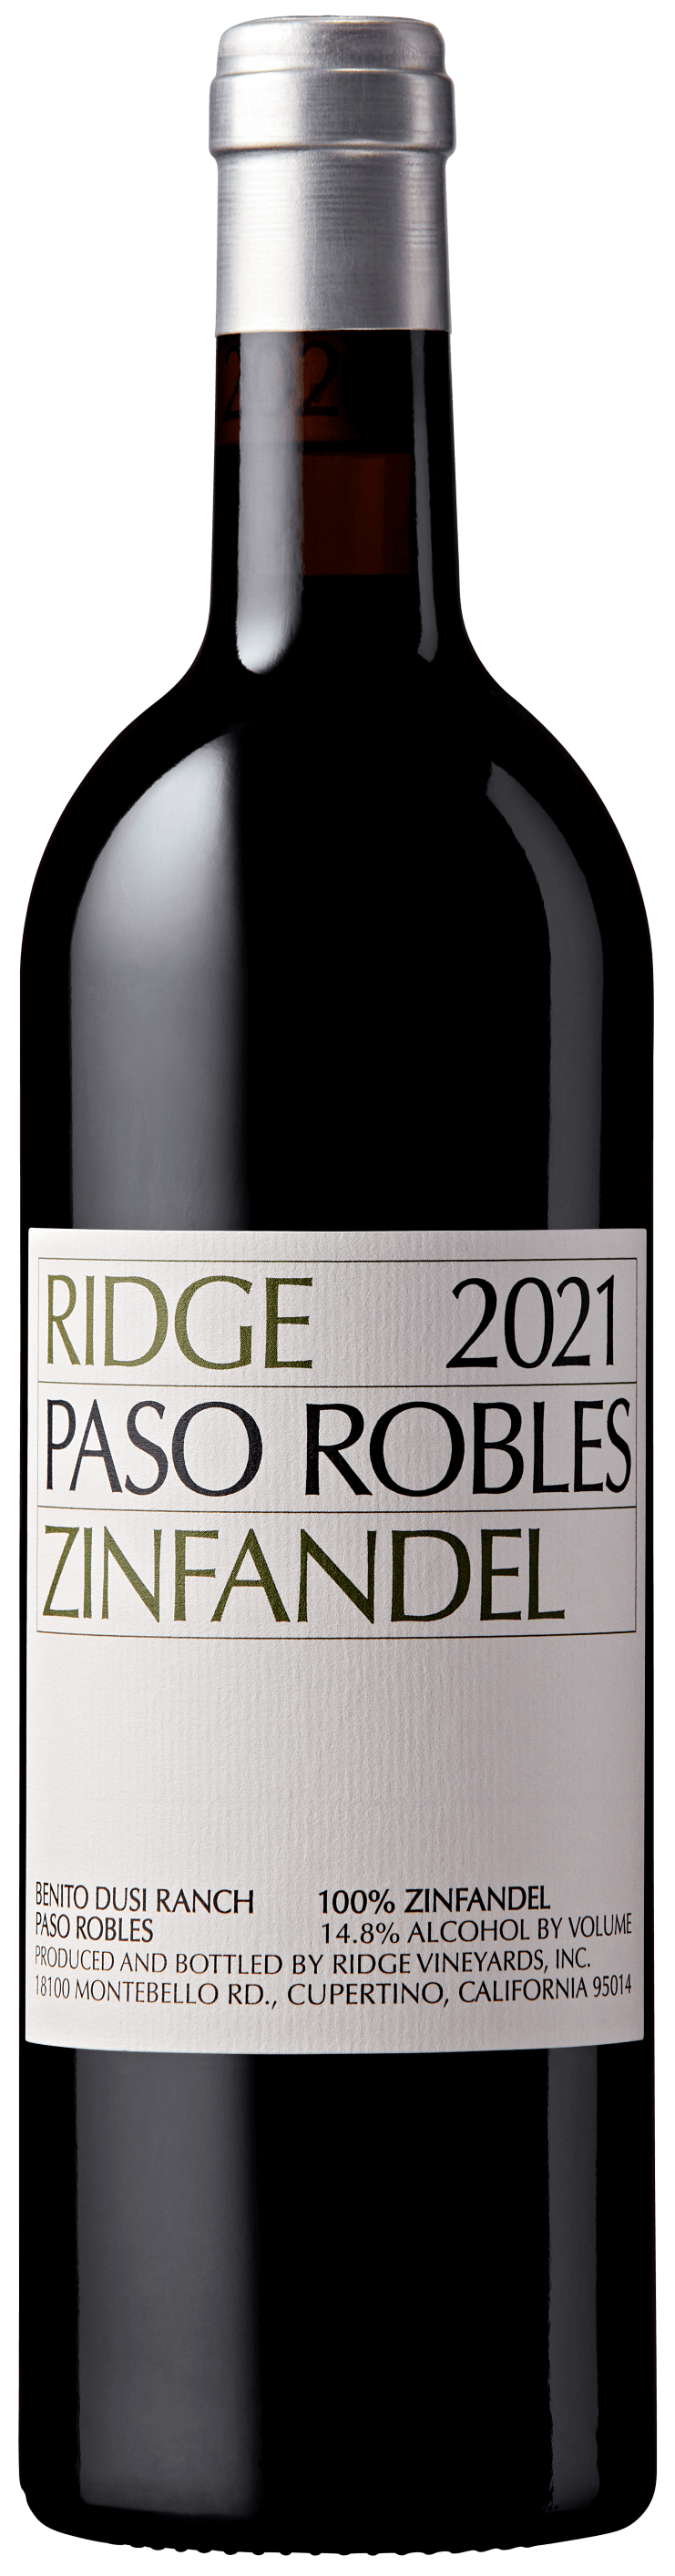 Ridge Vineyards Paso Robles Zinfandel 2021 750ml